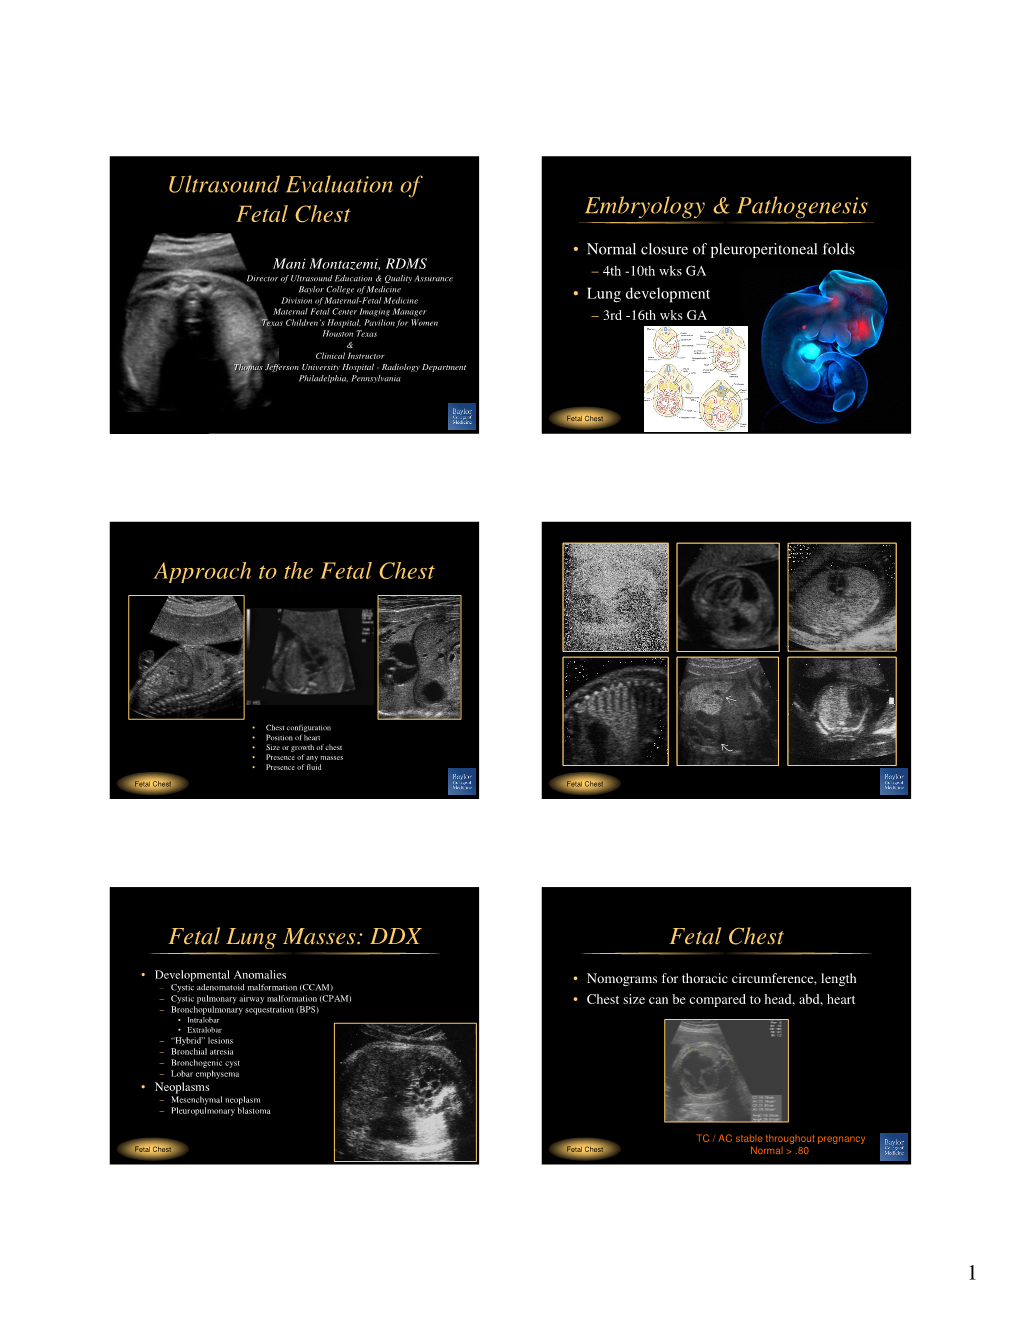 Ultrasound Evaluation of Fetal Chest